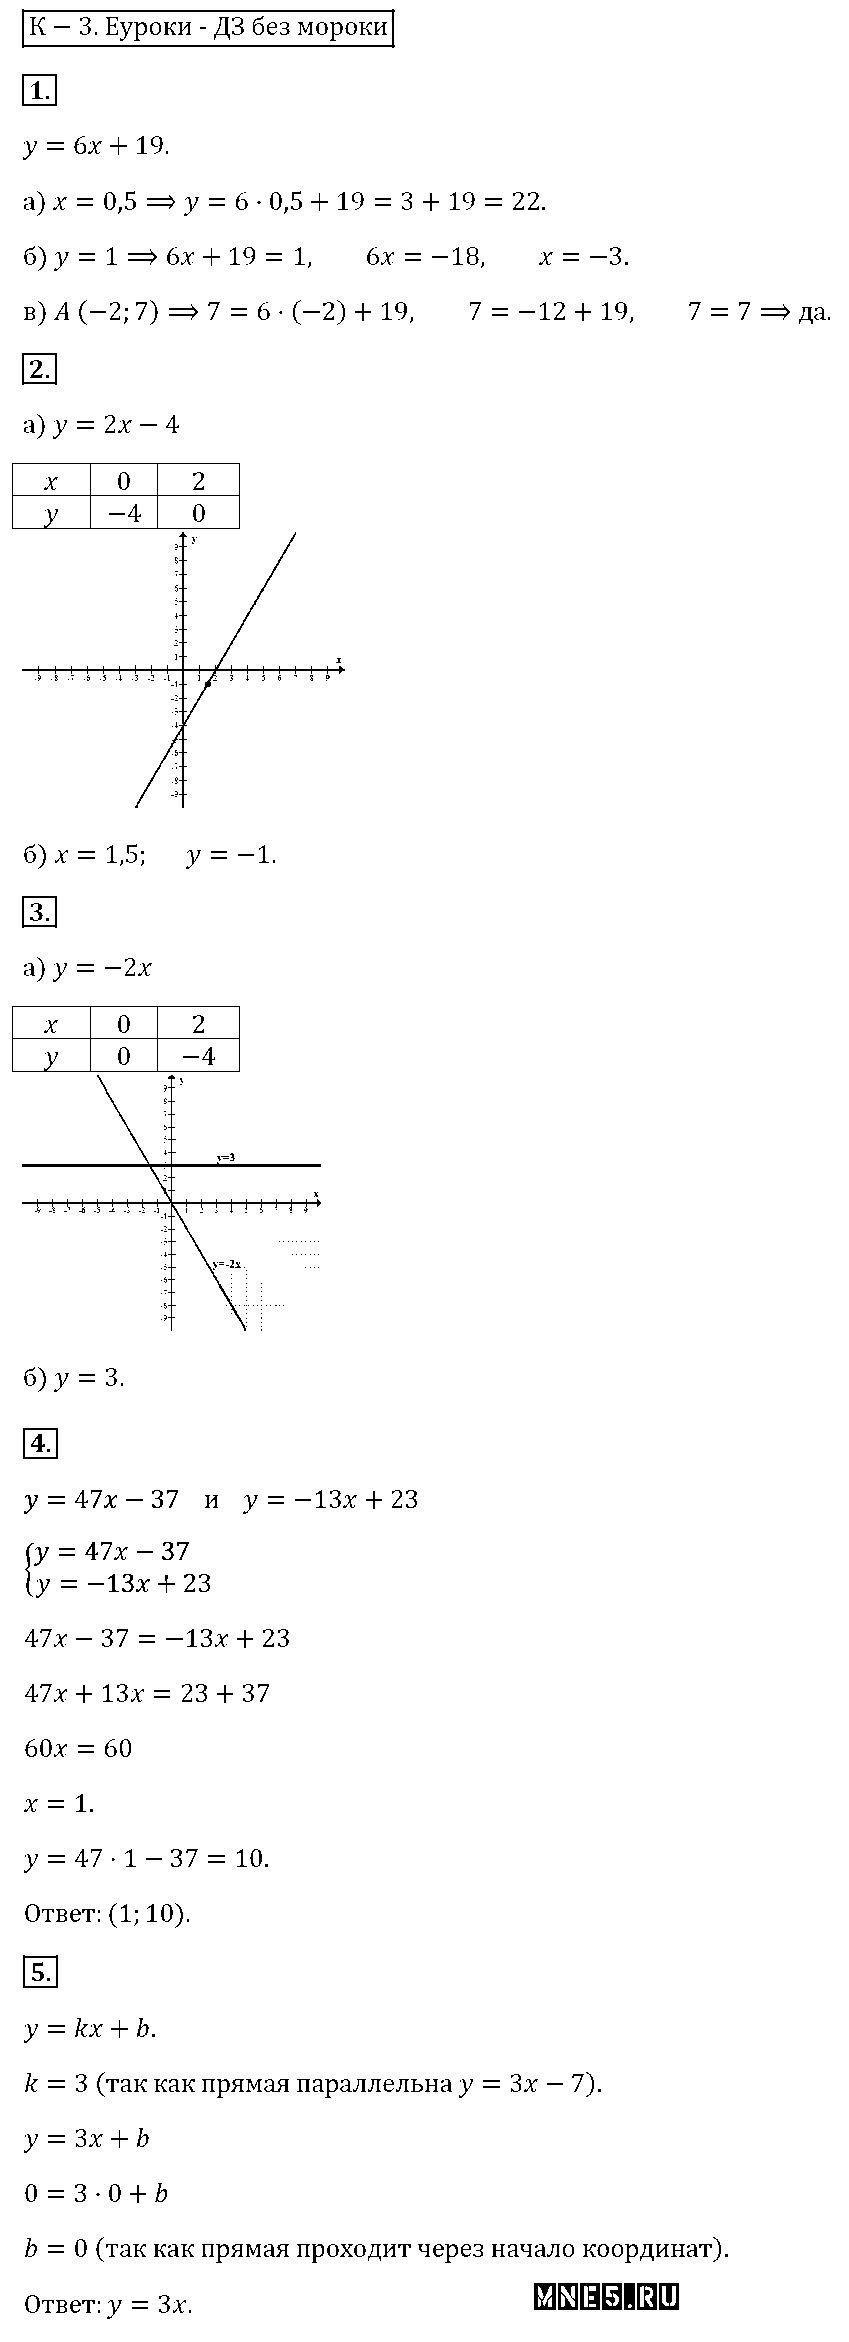 ГДЗ Алгебра 7 класс - К-3